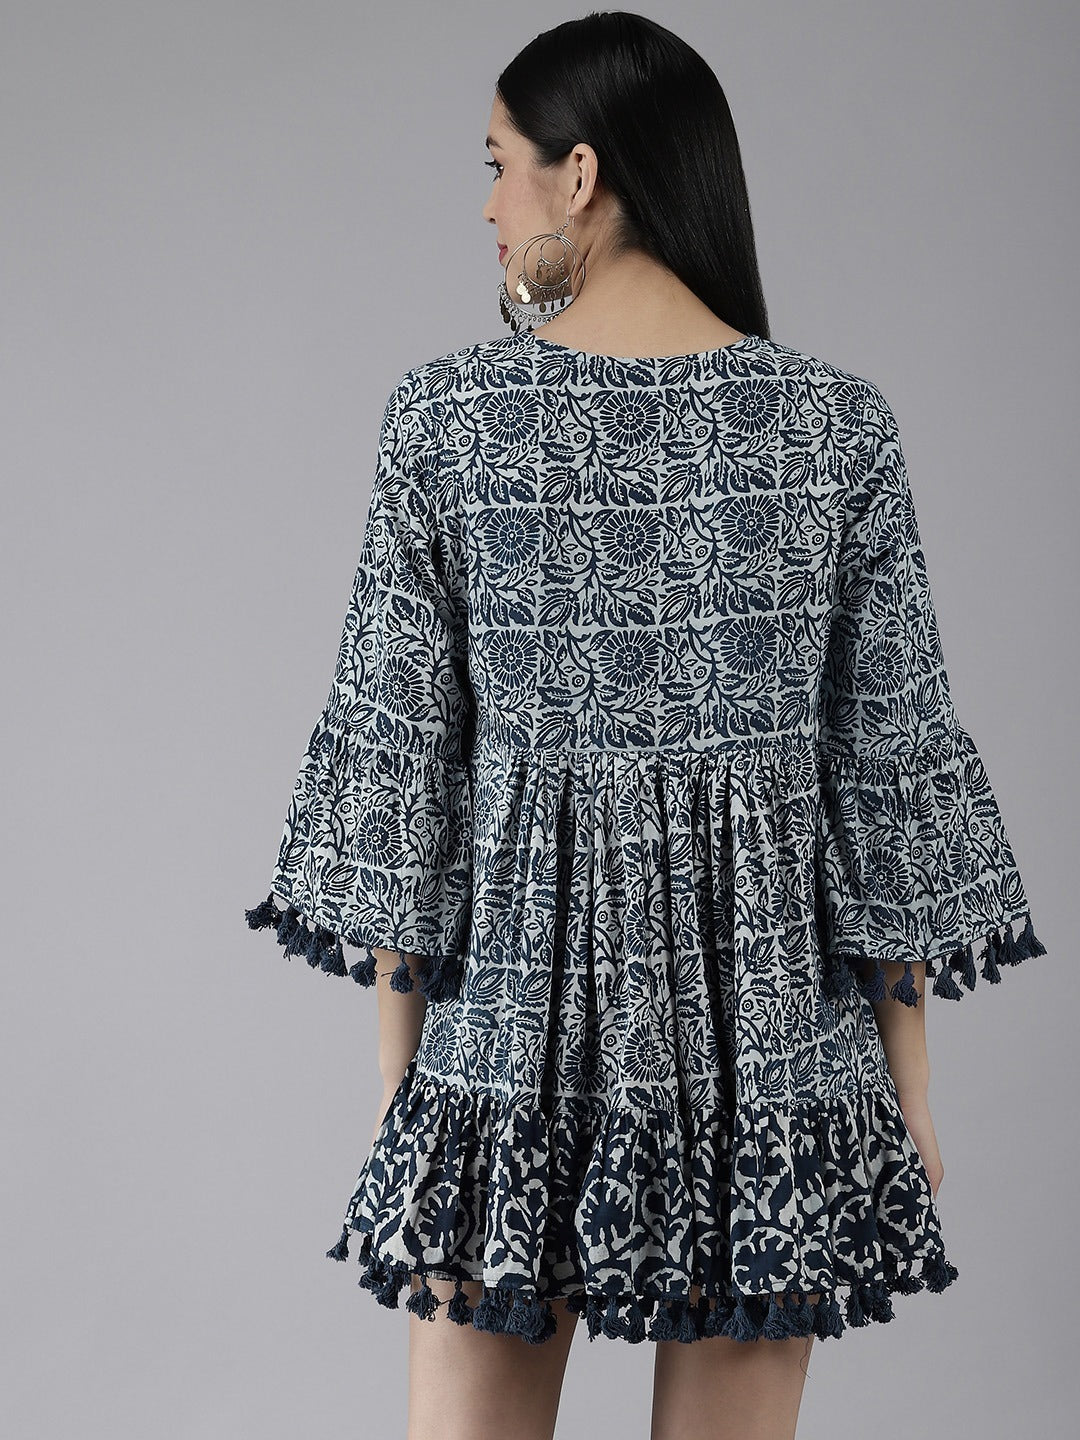 Navy Blue Printed Dress-Yufta Store-9858DRSBLS